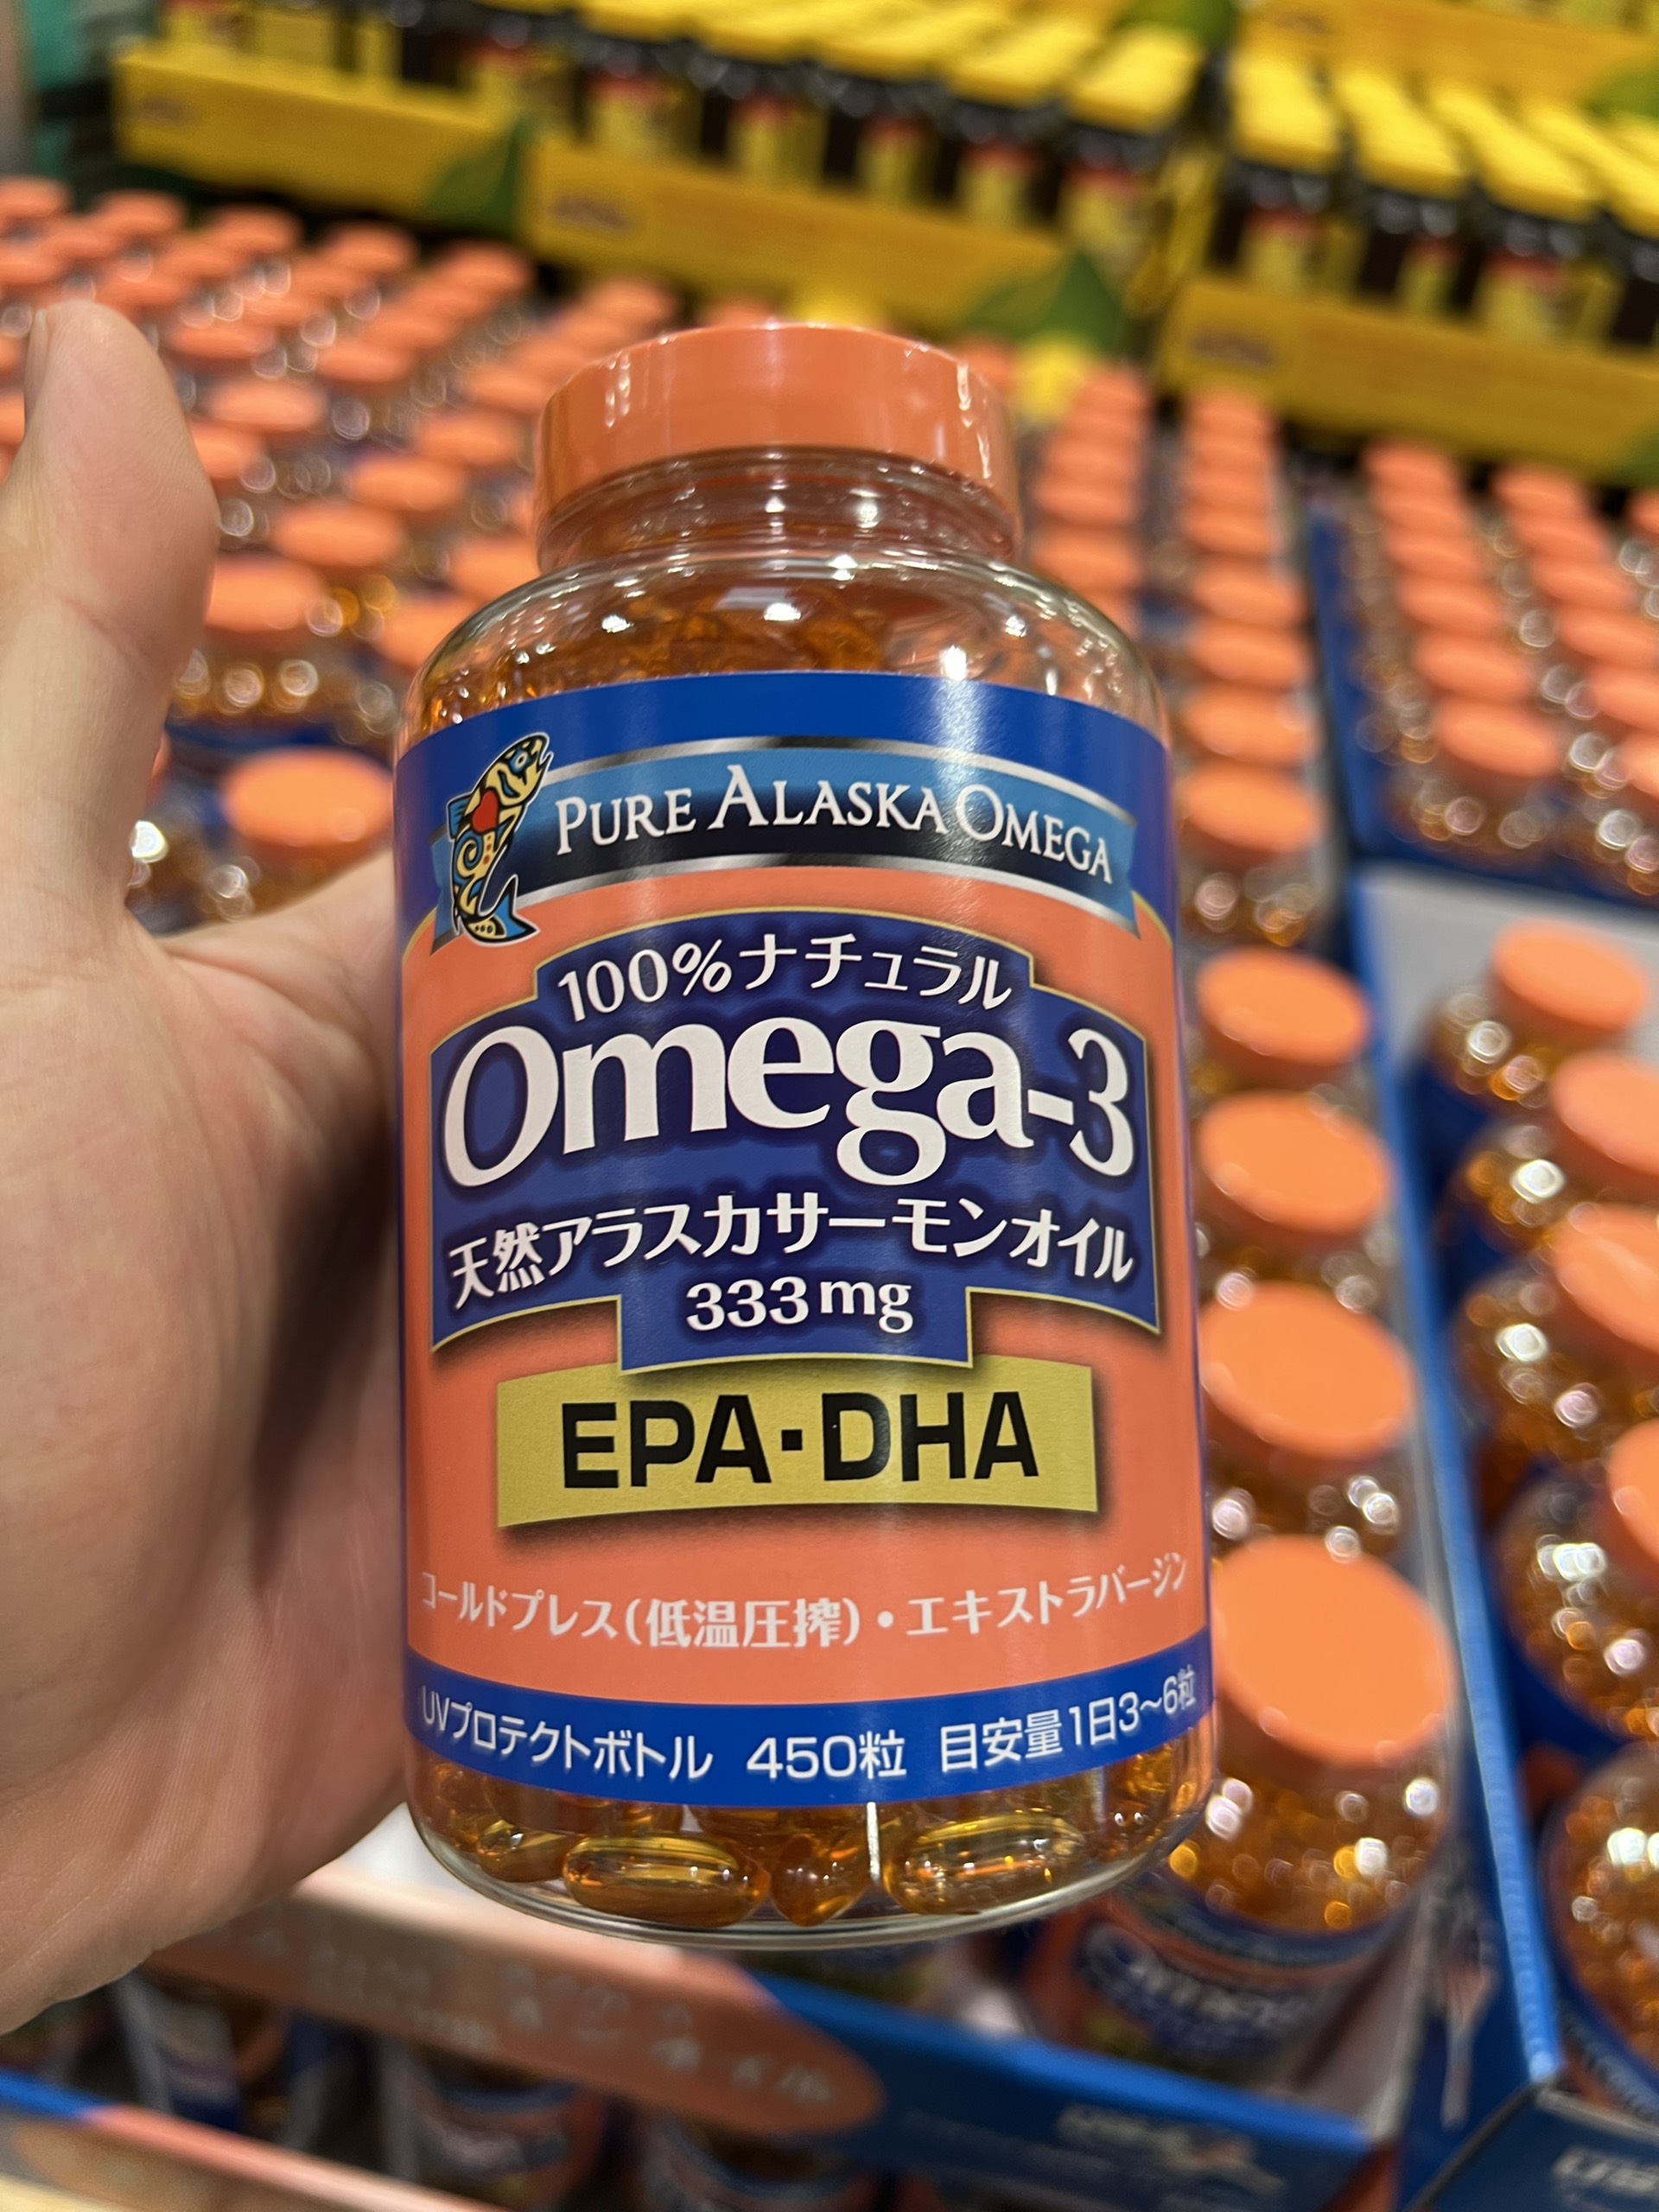 vien dau ca hoi pure alaska omega wild alaskan salmon oil omega 3 1000mg japan